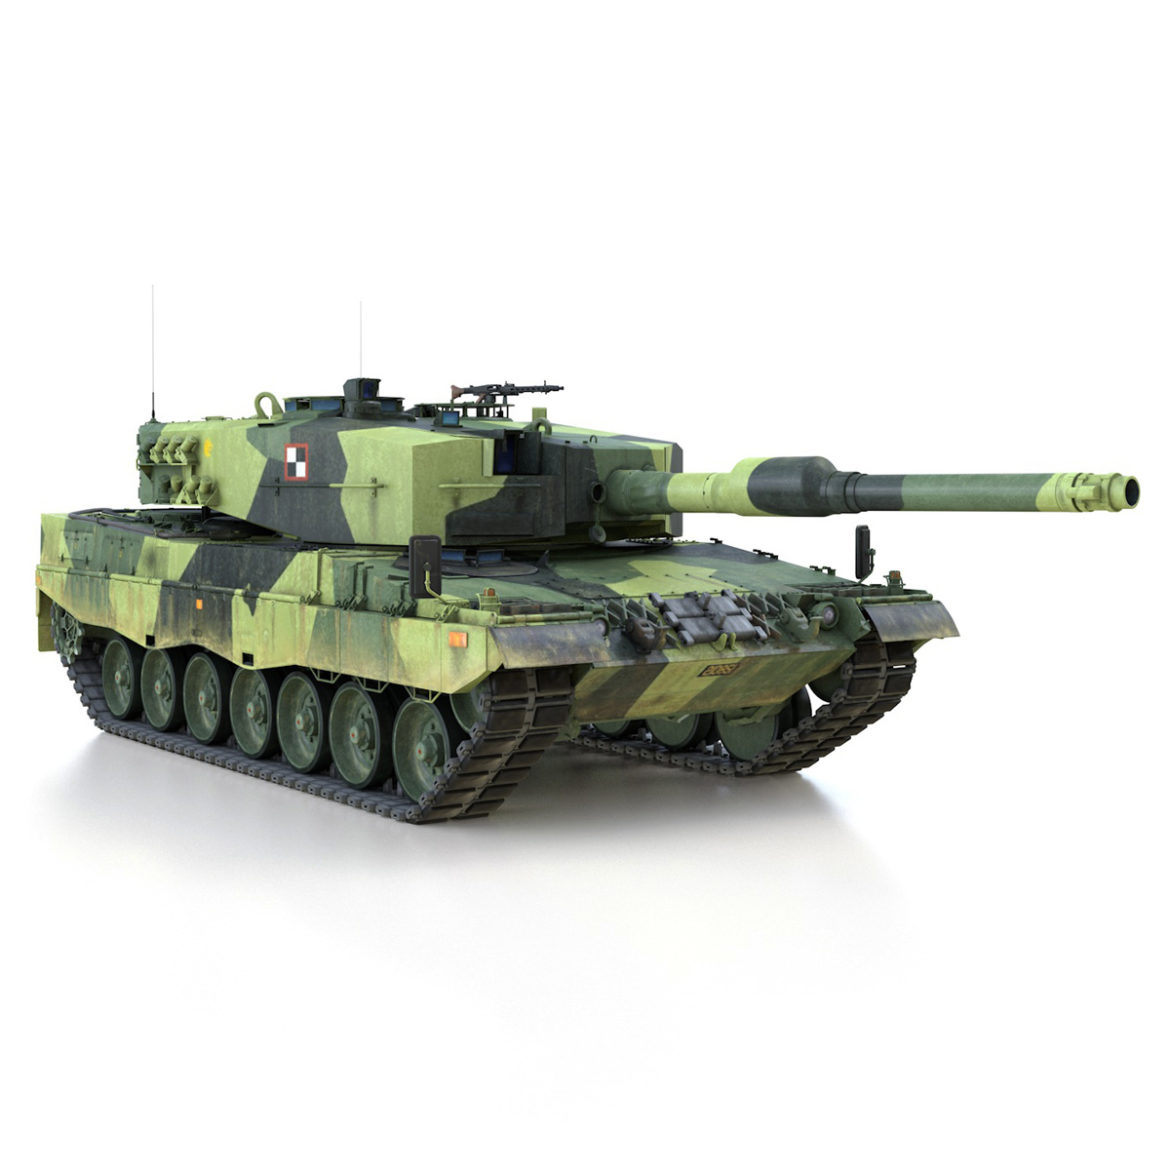 stridsvagn 121 – swedish army 3d model 3ds c4d lwo texture obj 307486